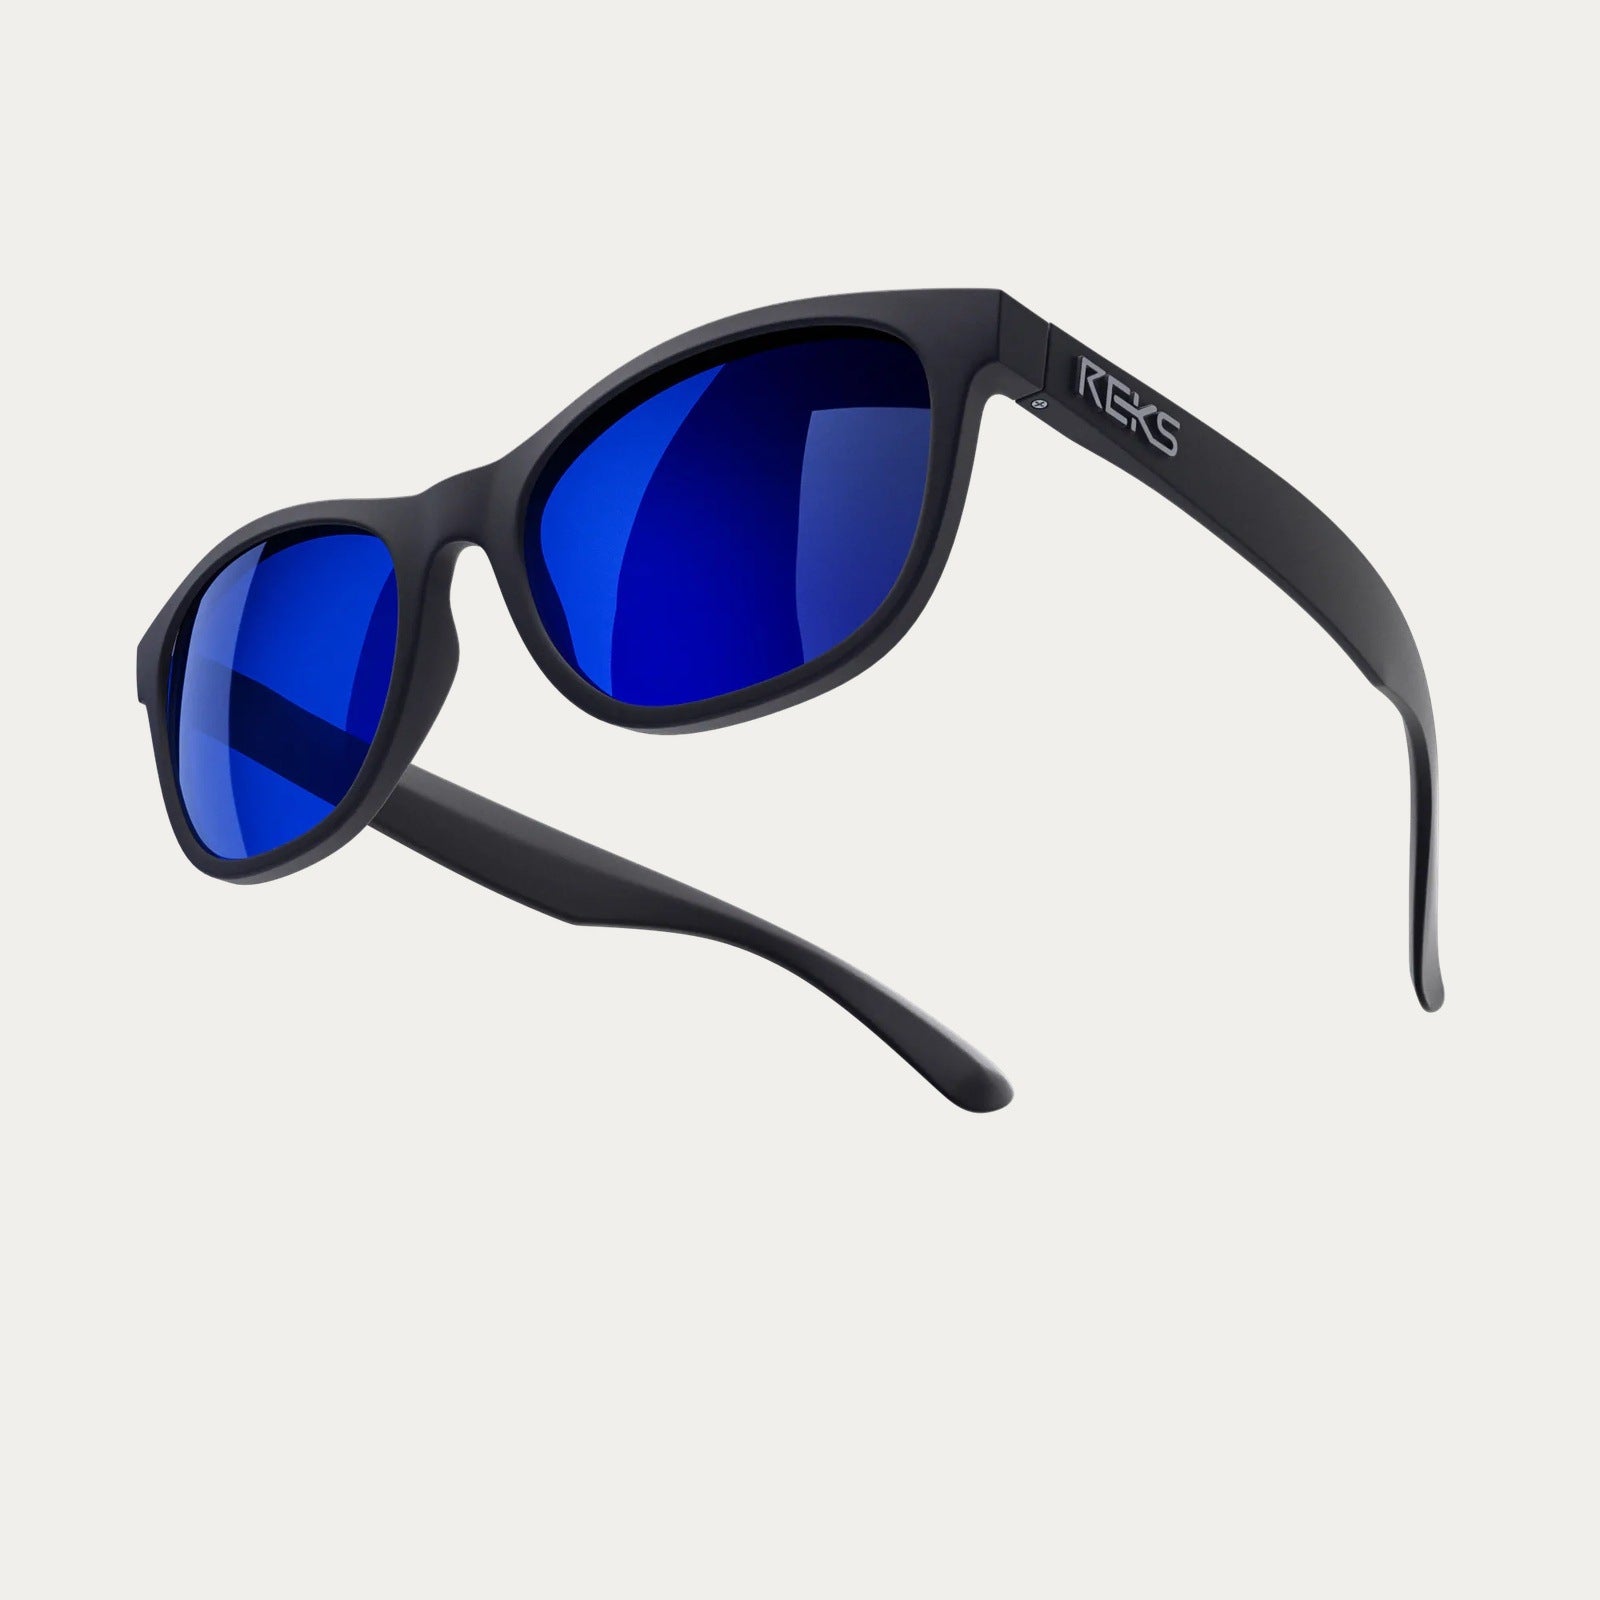 Reks | Seafarer Polarized Polycarbonate Sunglasses Blue Mirror